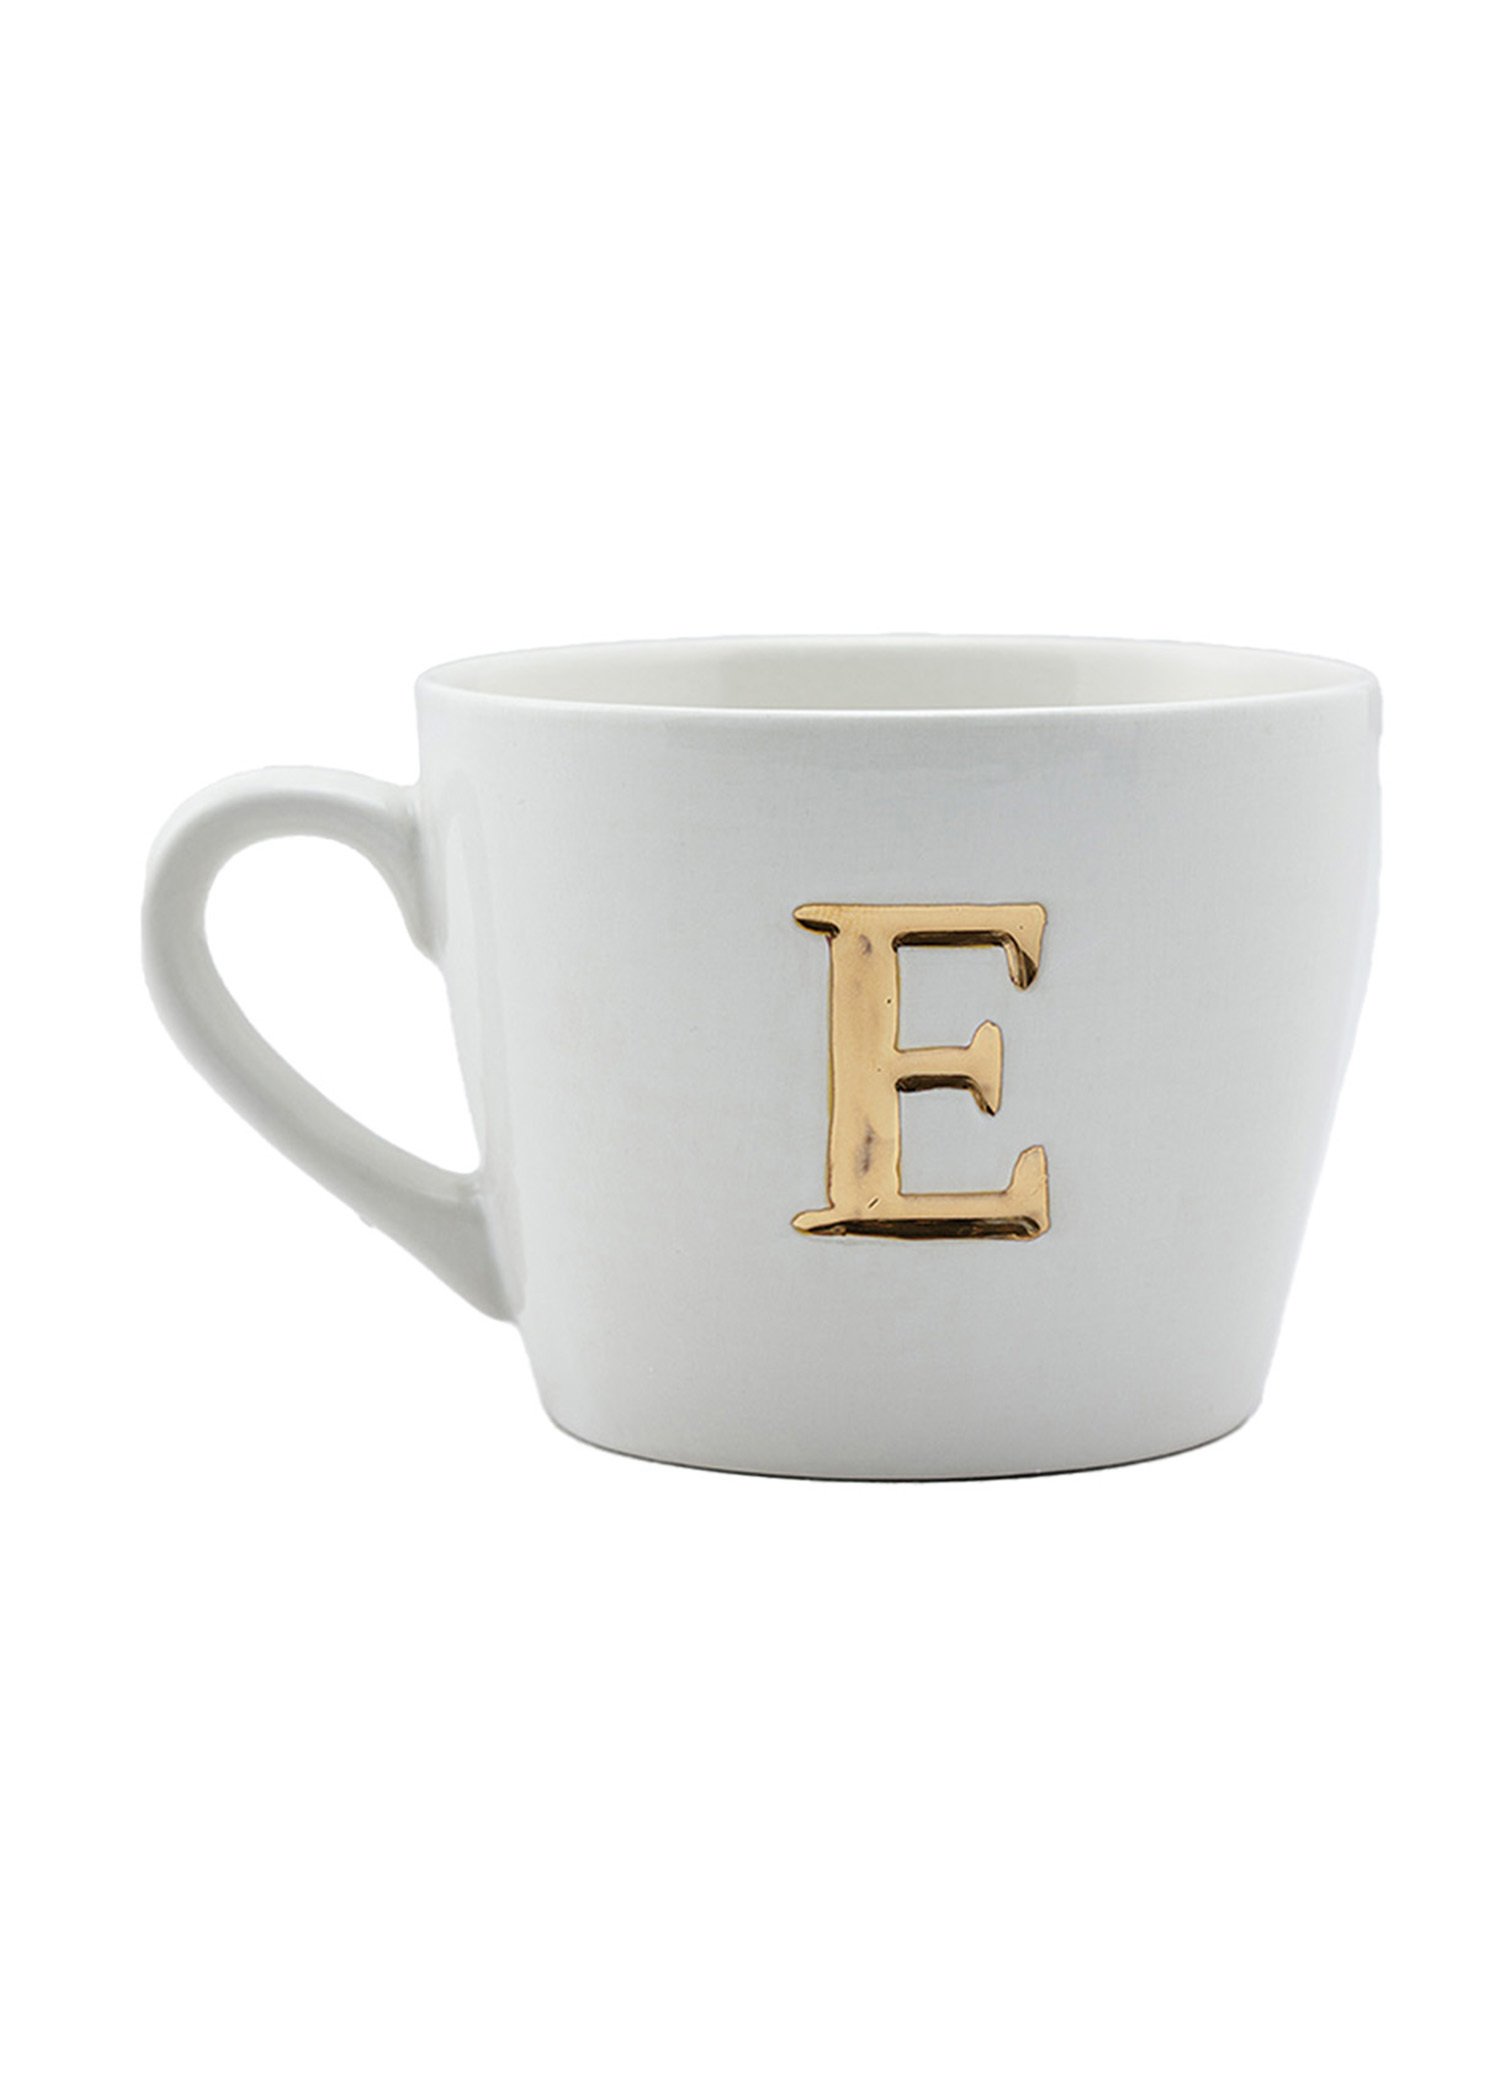 Monogram mug